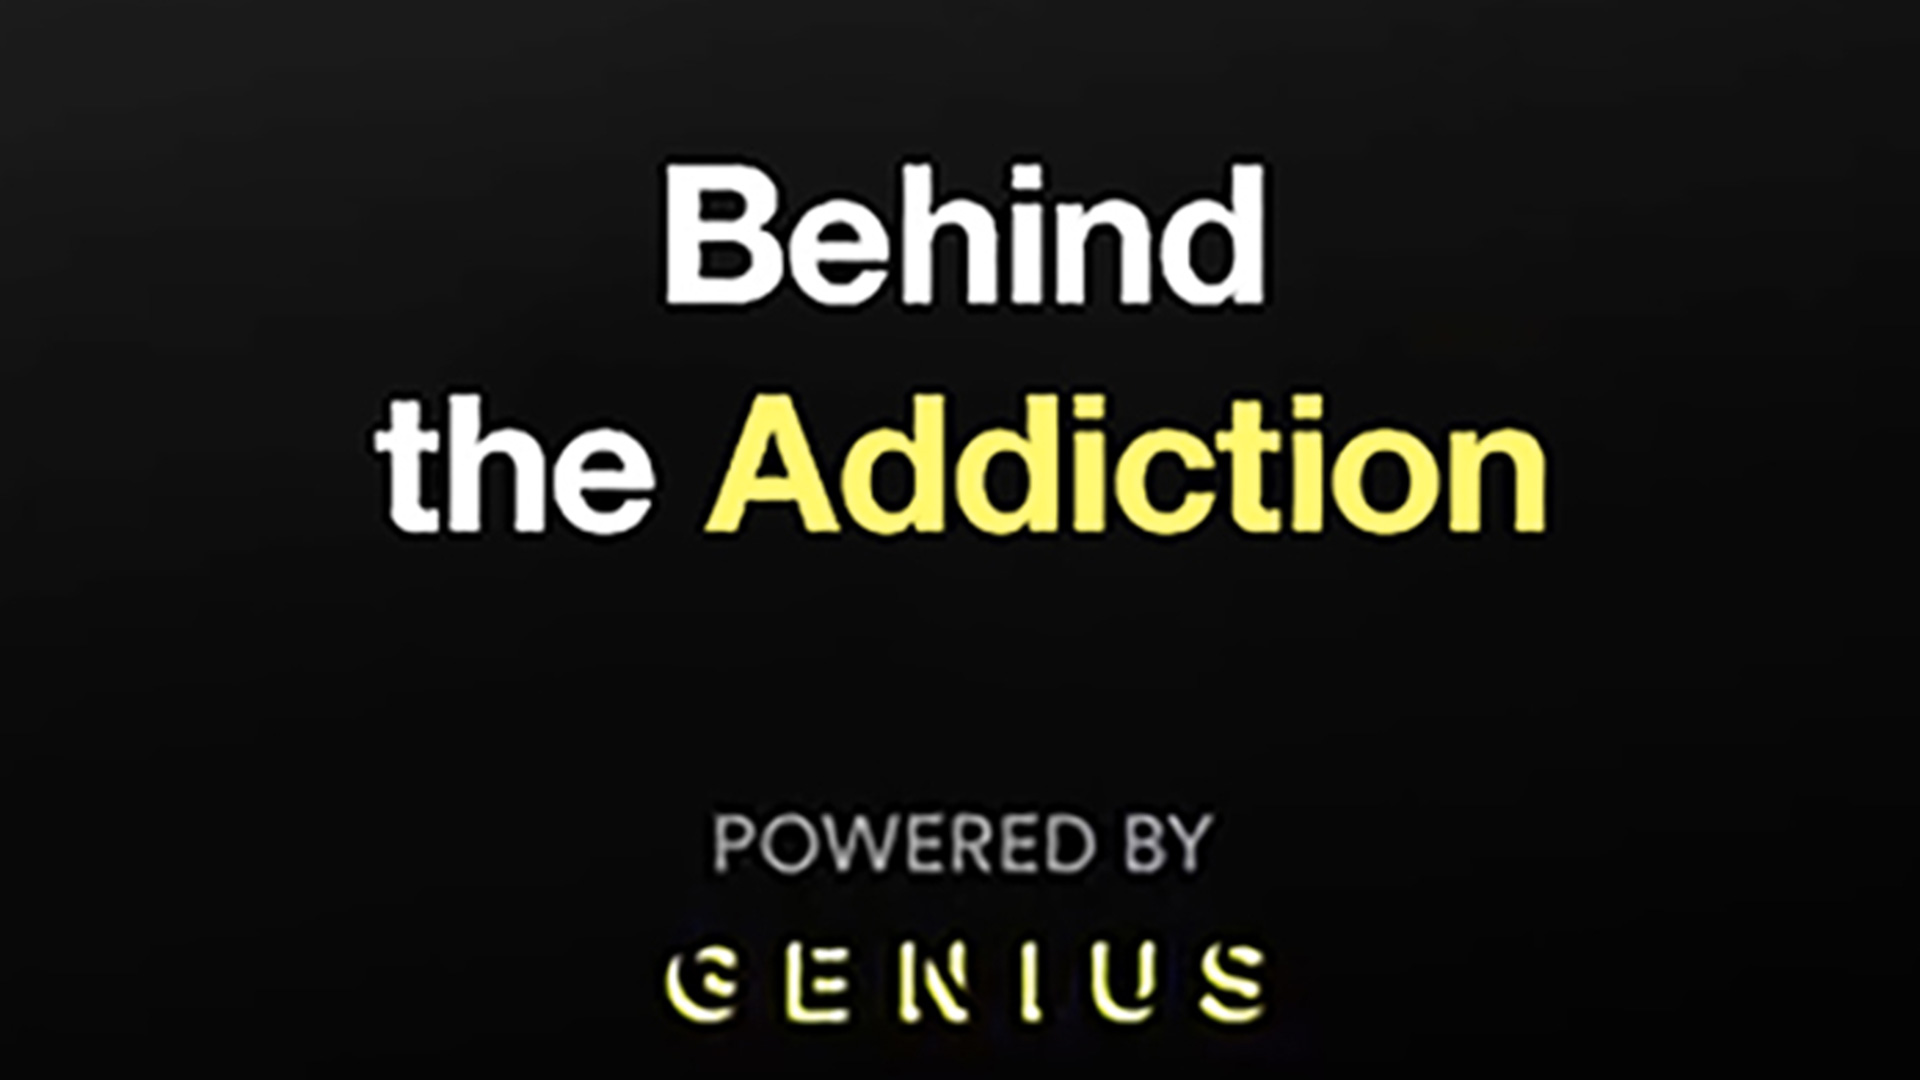 Behind the addiction